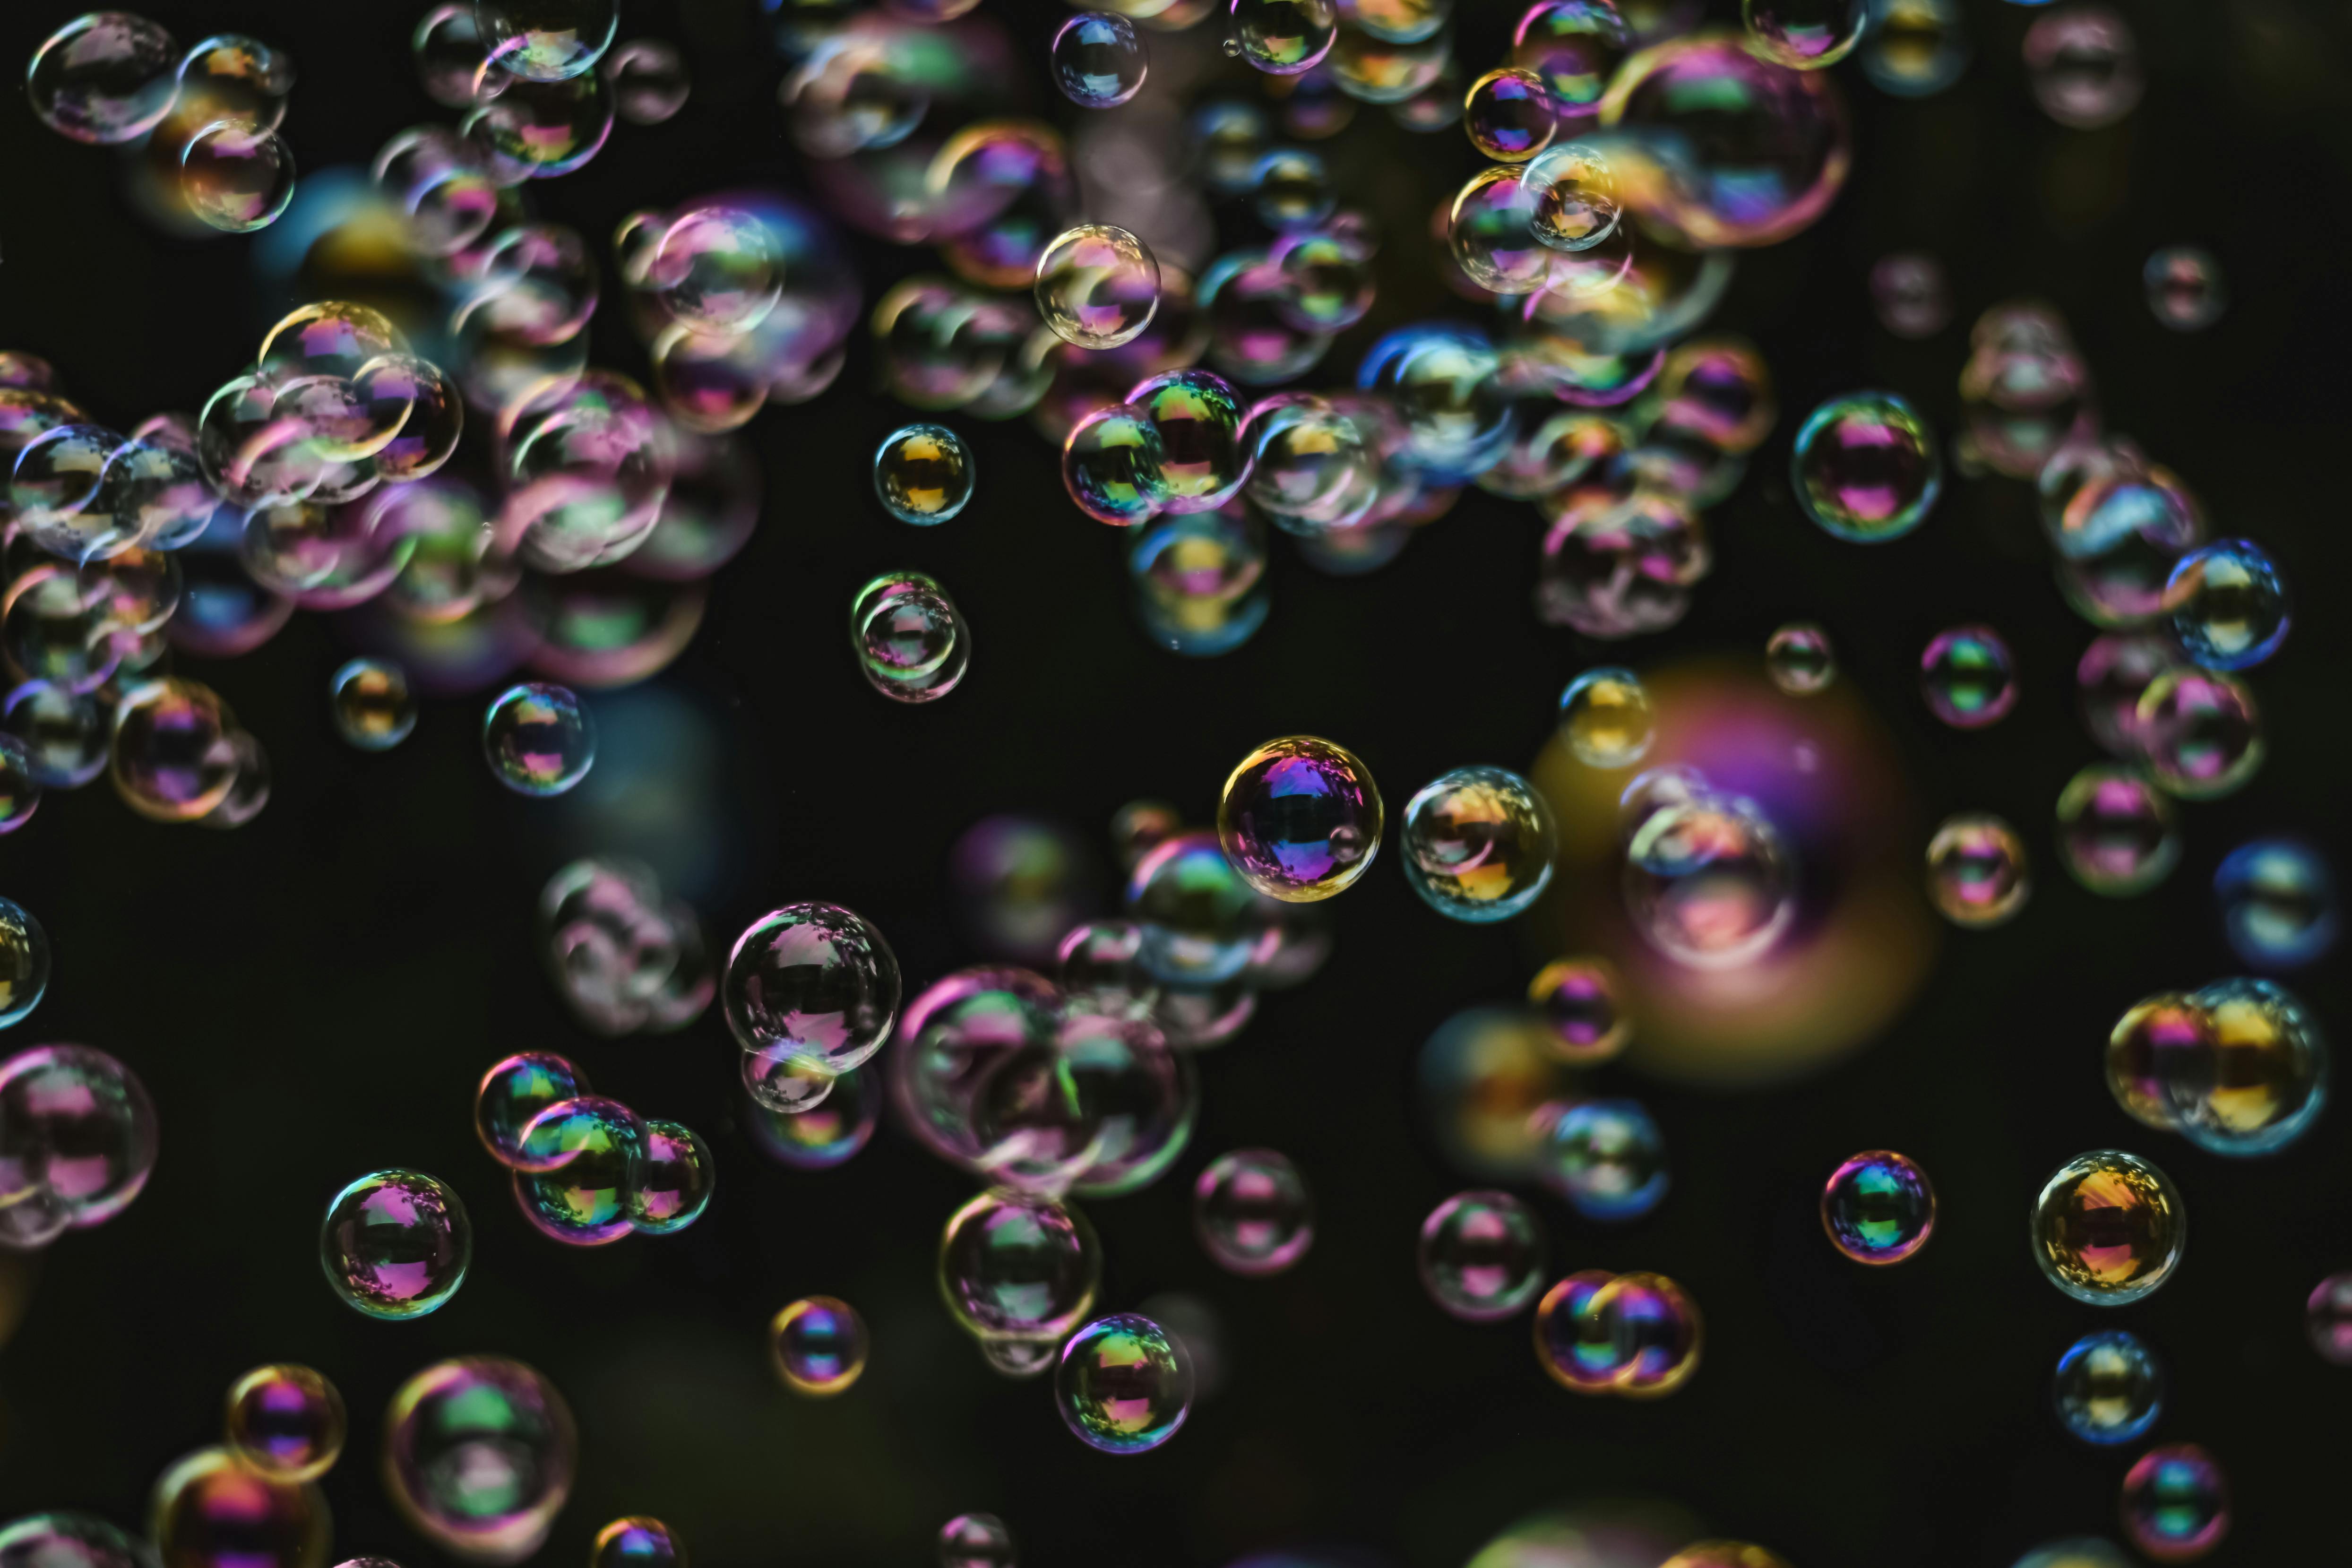 150-x-150-pixels-bubbles-photos-download-free-150-x-150-pixels-bubbles